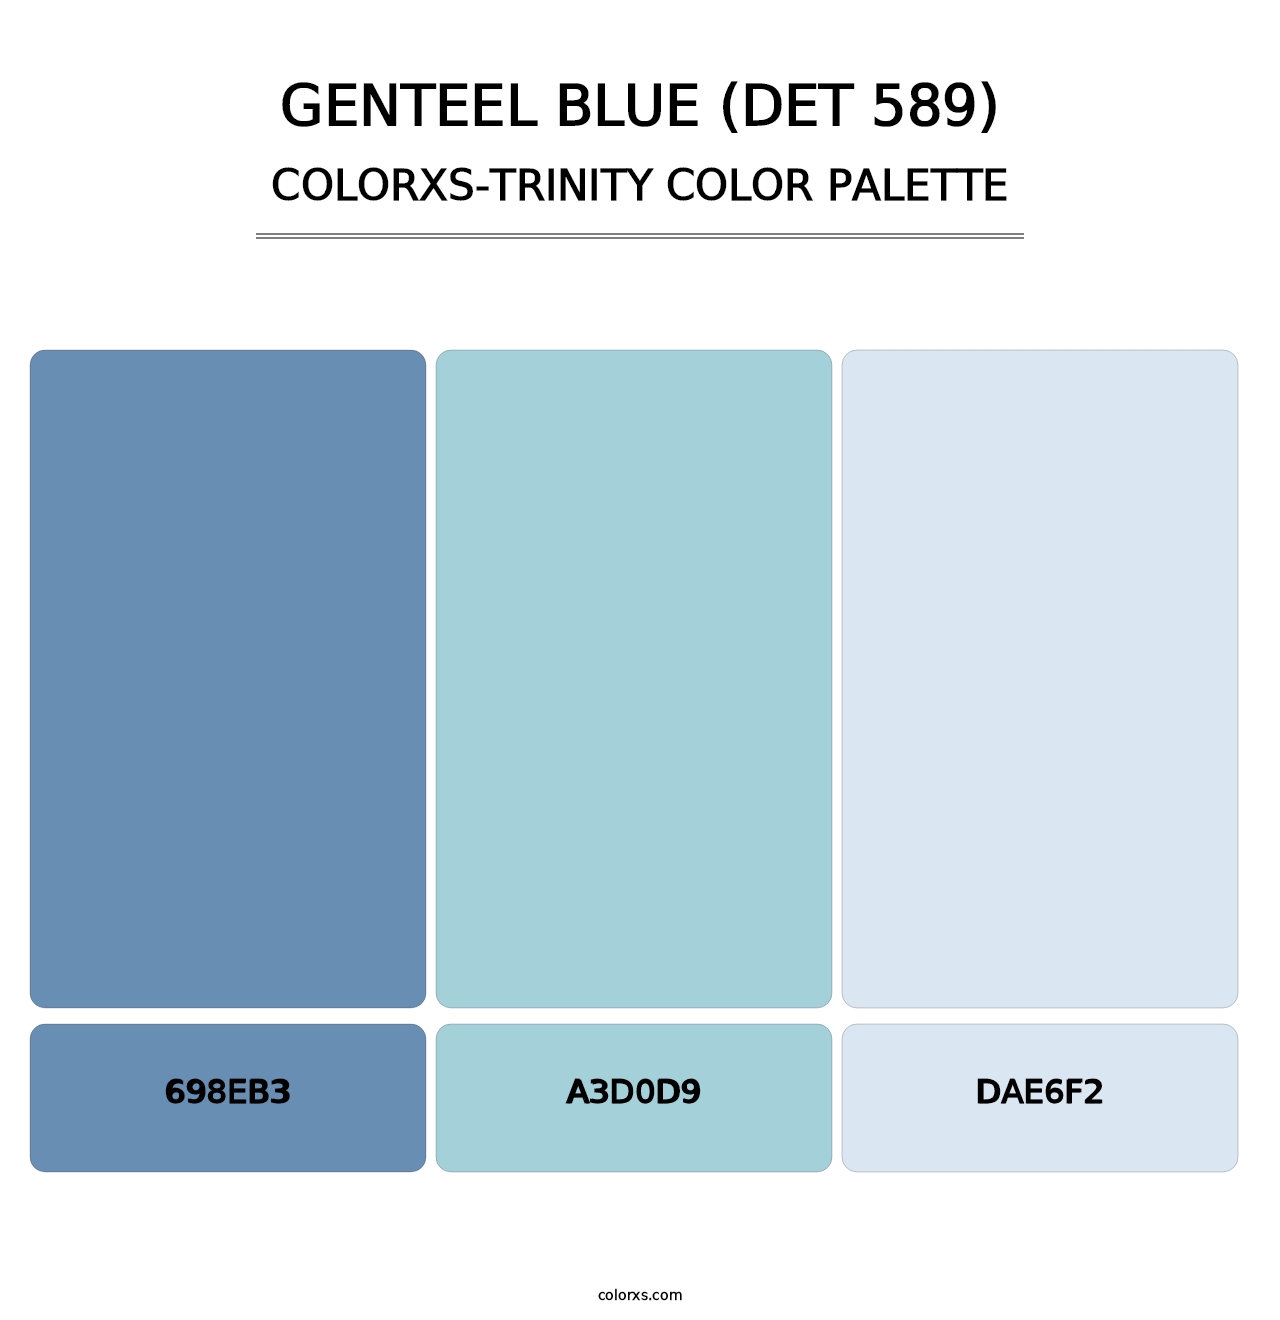 Genteel Blue (DET 589) - Colorxs Trinity Palette